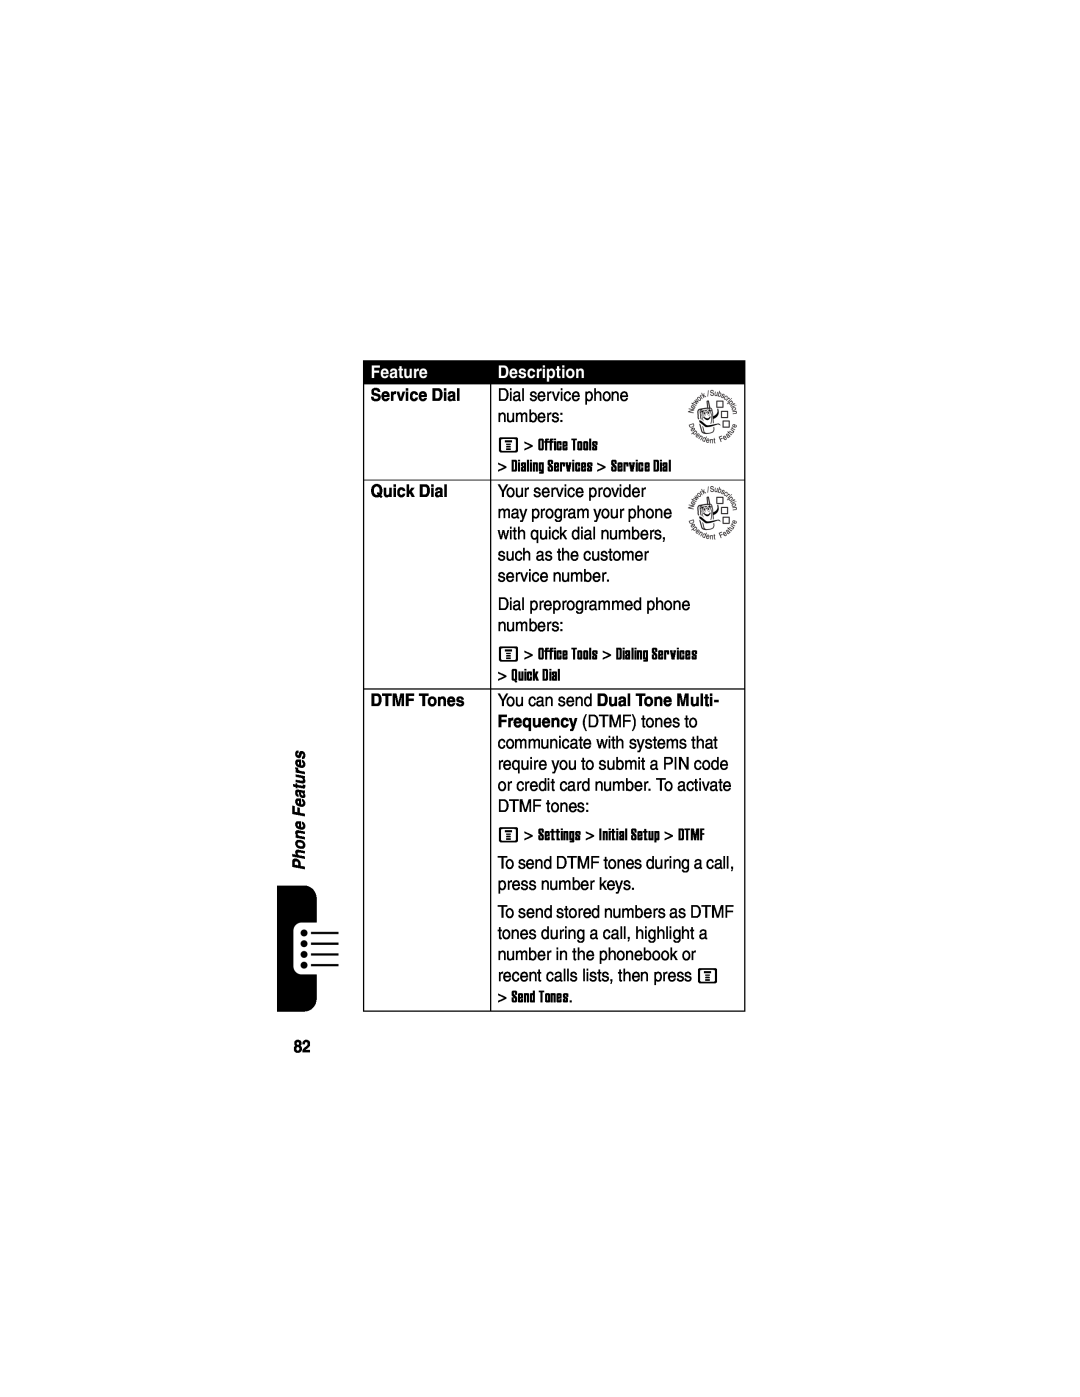 Motorola V635 manual Service Dial, Dial service phone, numbers, Quick Dial, DTMF Tones, Feature, Description 